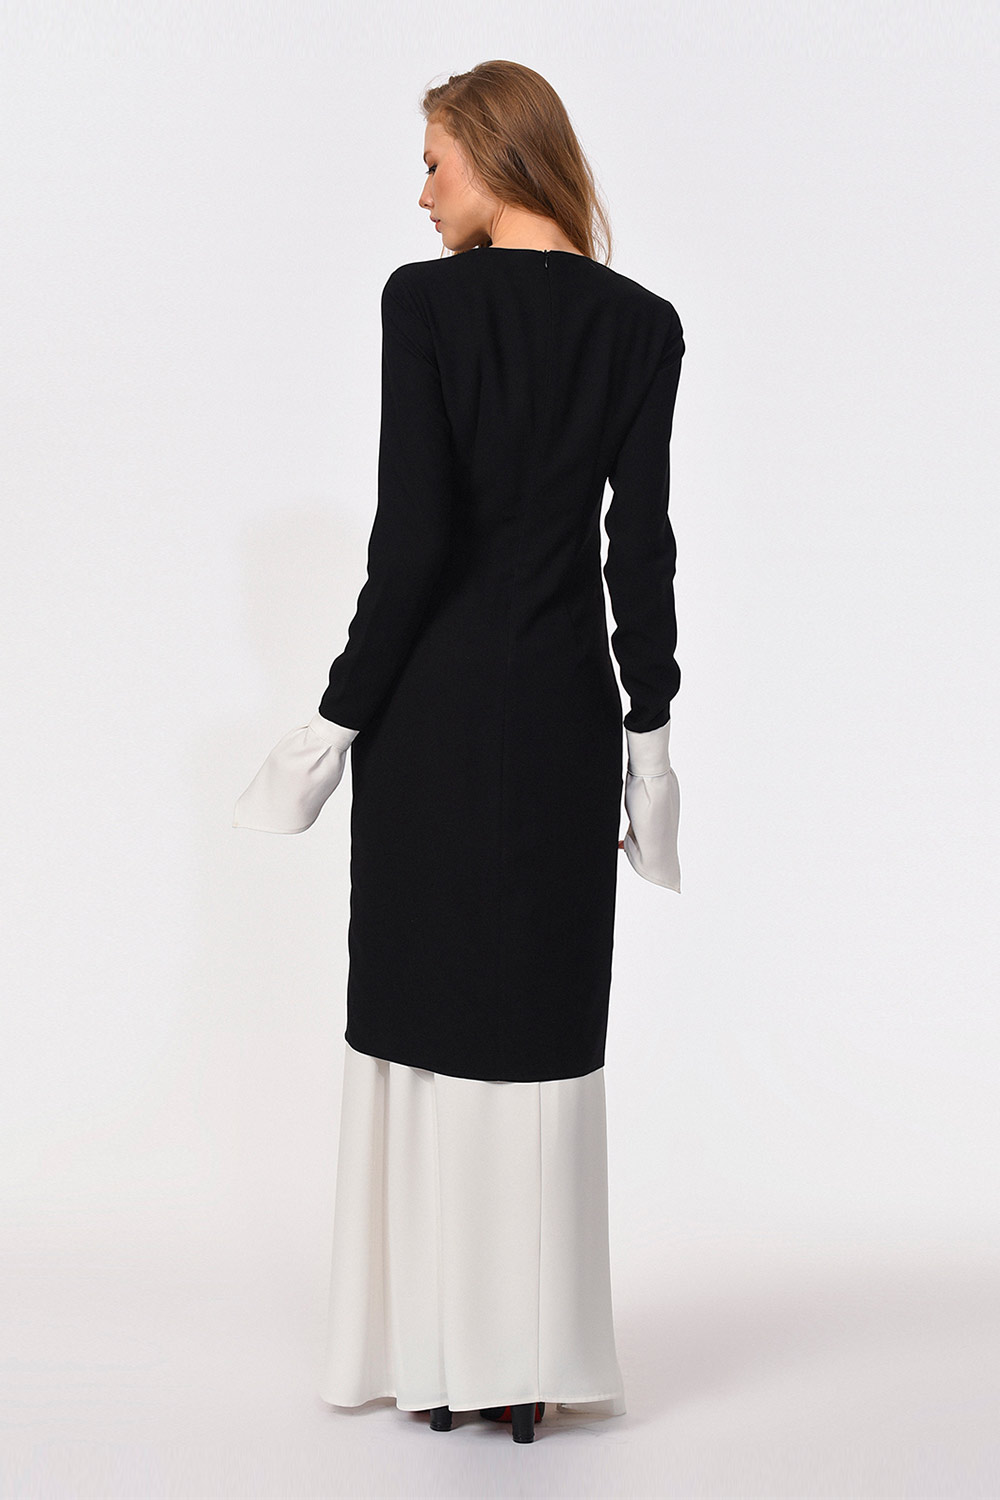 Lace Garnish Long Dress (Black) 